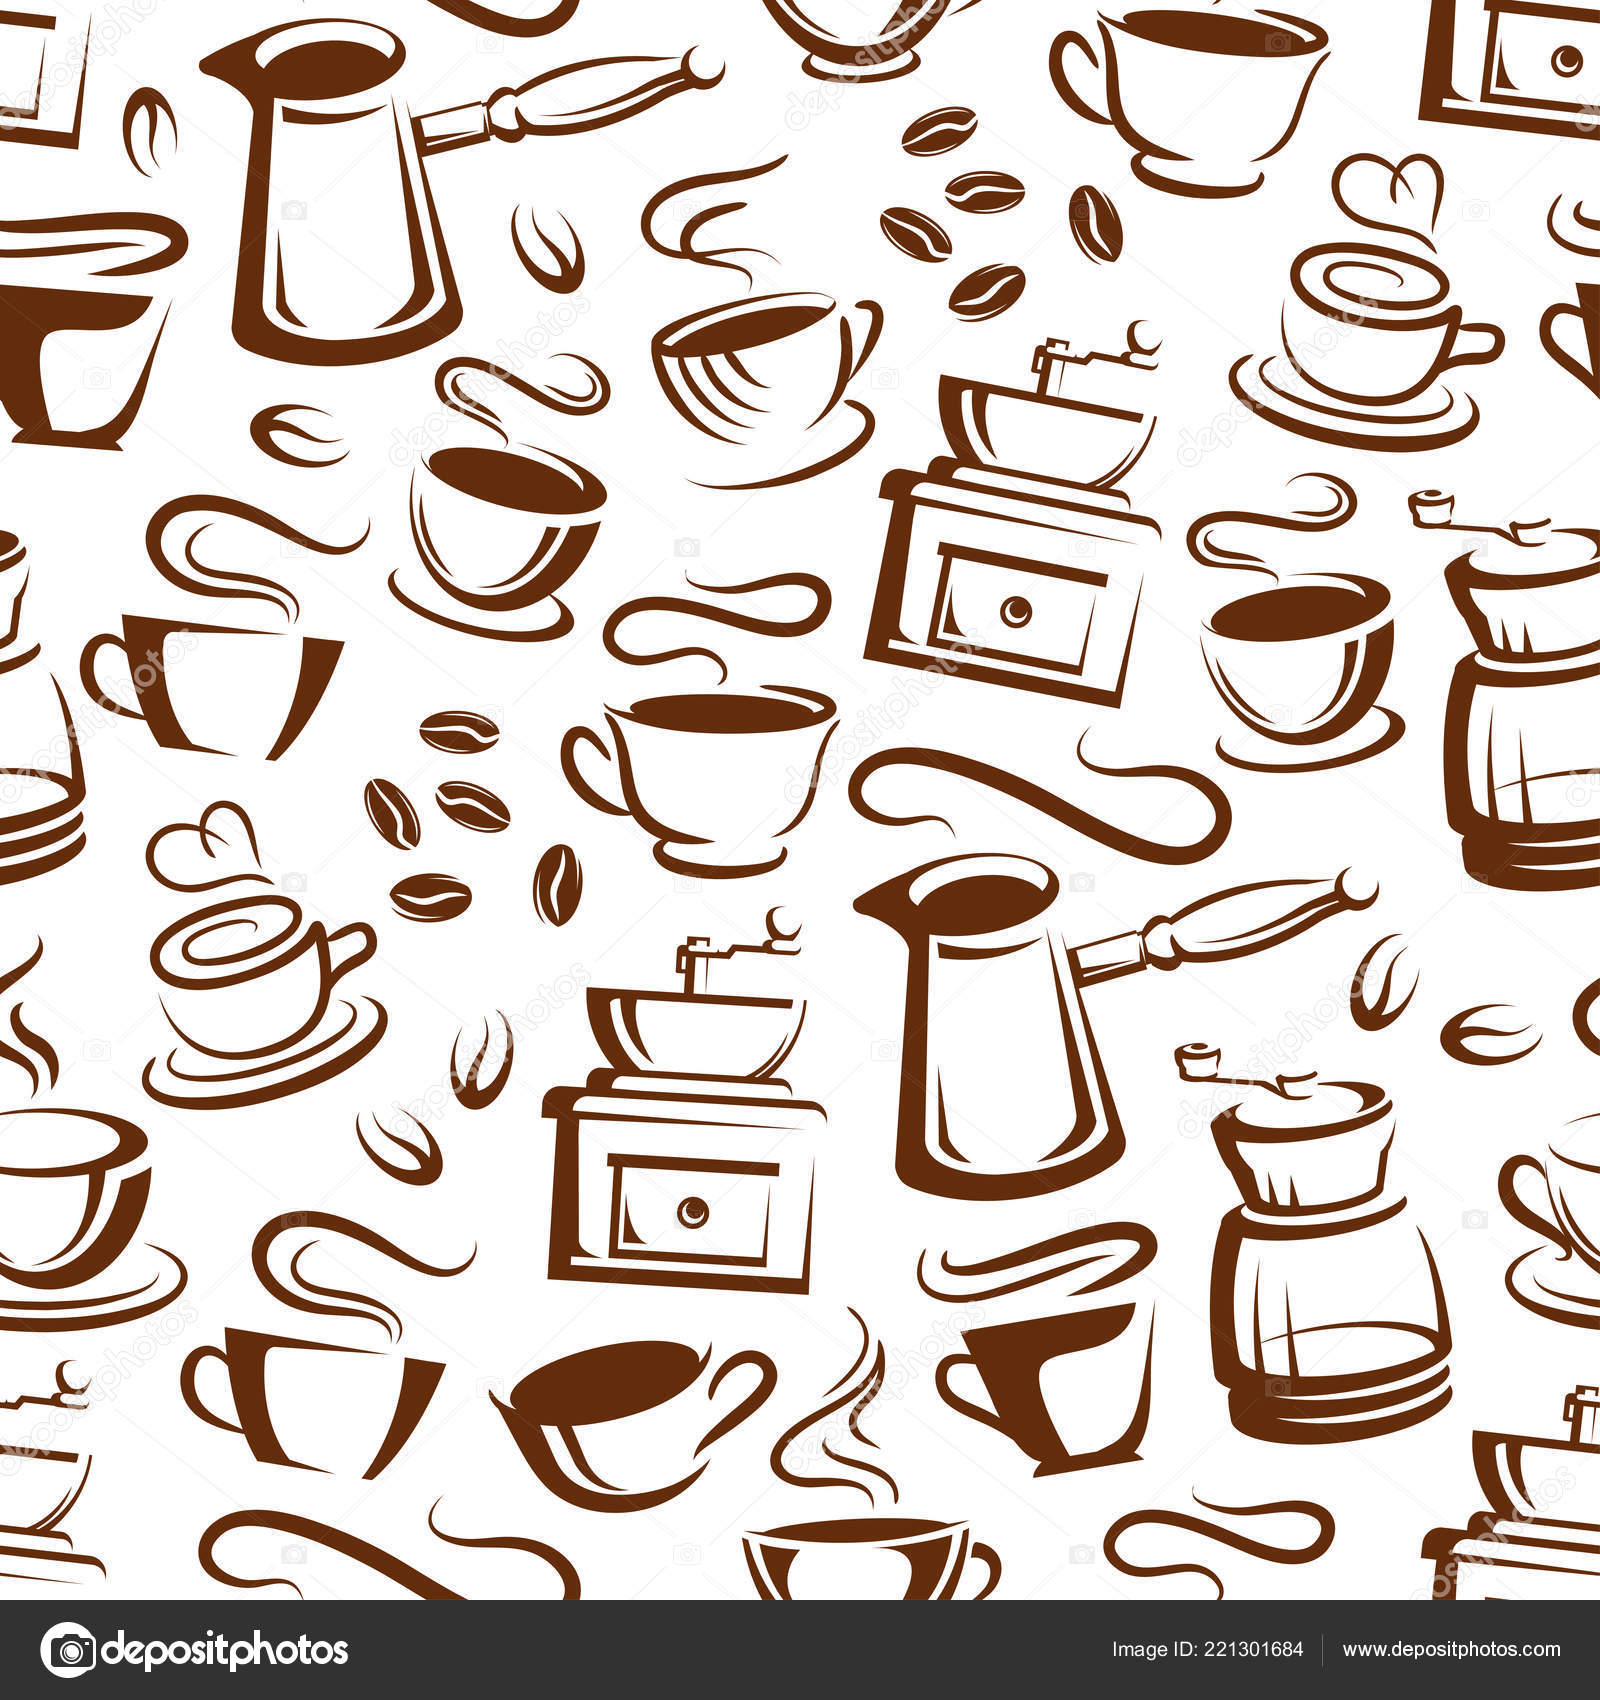 https://st4.depositphotos.com/1020070/22130/v/1600/depositphotos_221301684-stock-illustration-coffee-cups-and-makers-seamless.jpg